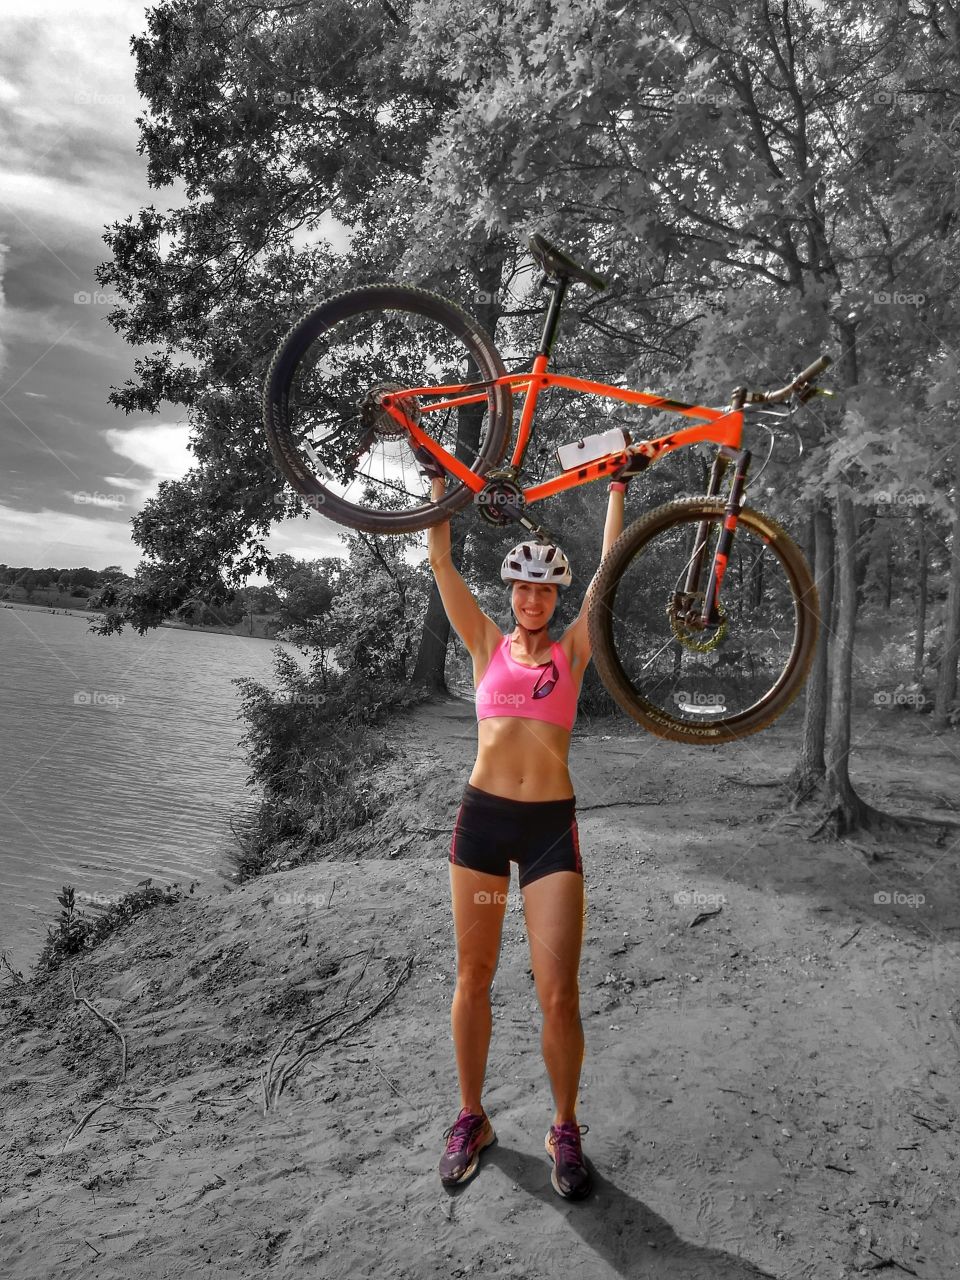 b&w color pop of beautiful woman cyclist